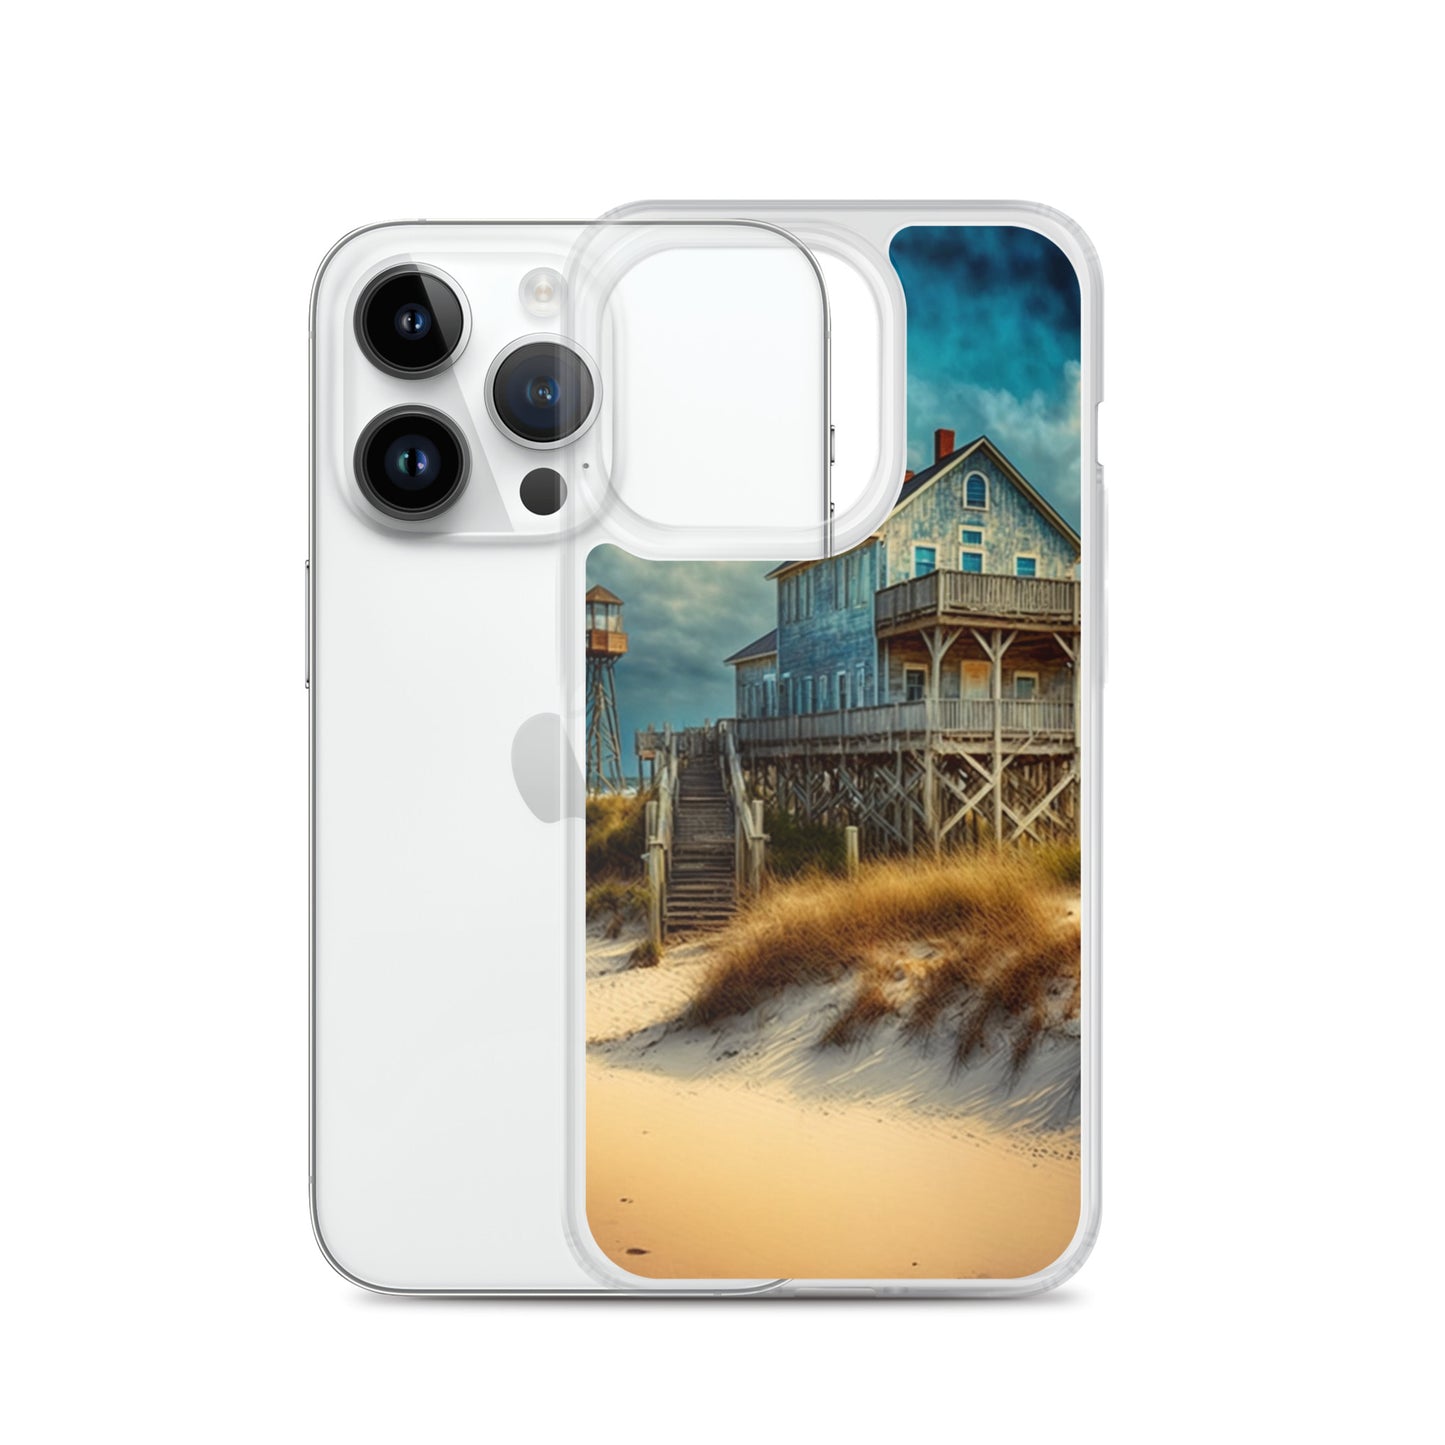 iPhone Case - Beach Life - Beach House